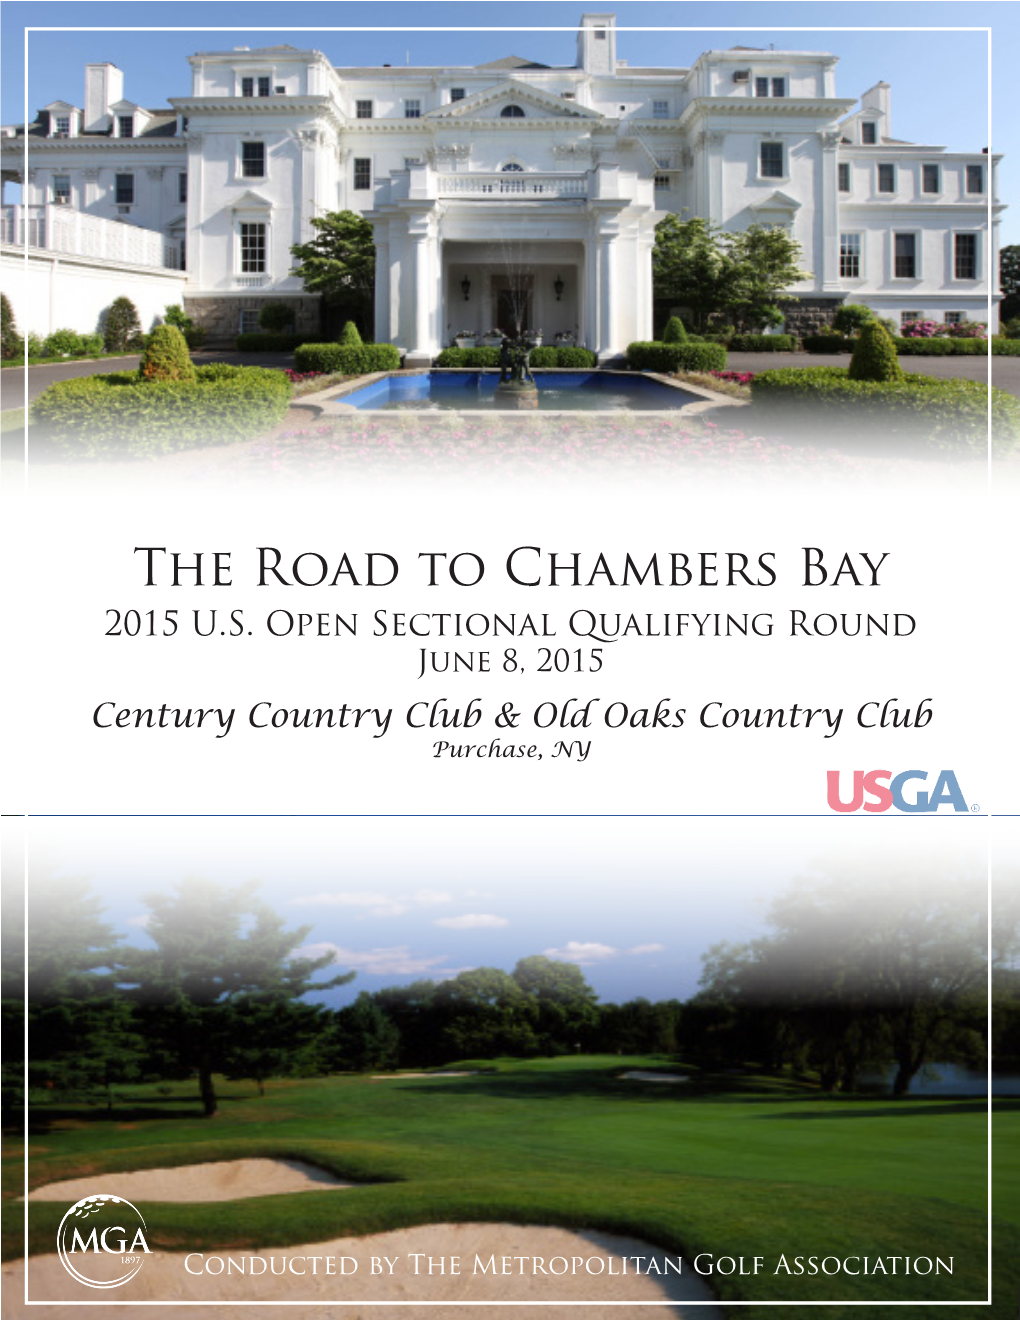 The Road to Chambers Bay 2015 U.S